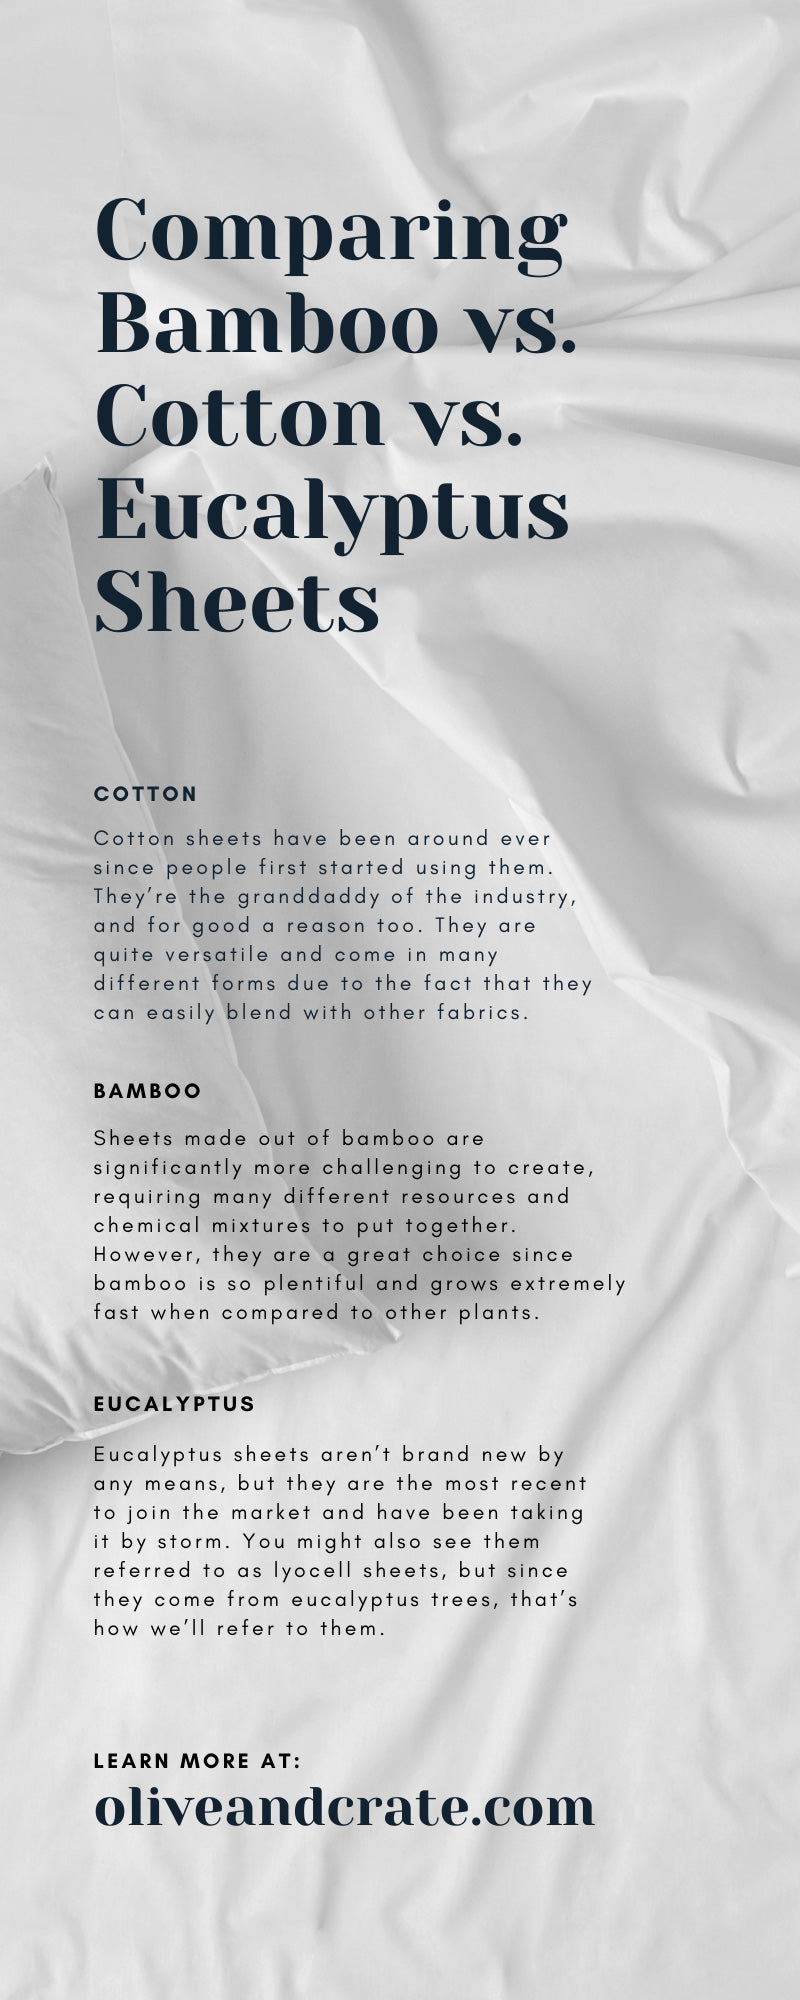 Comparing Bamboo vs. Cotton vs. Eucalyptus Sheets